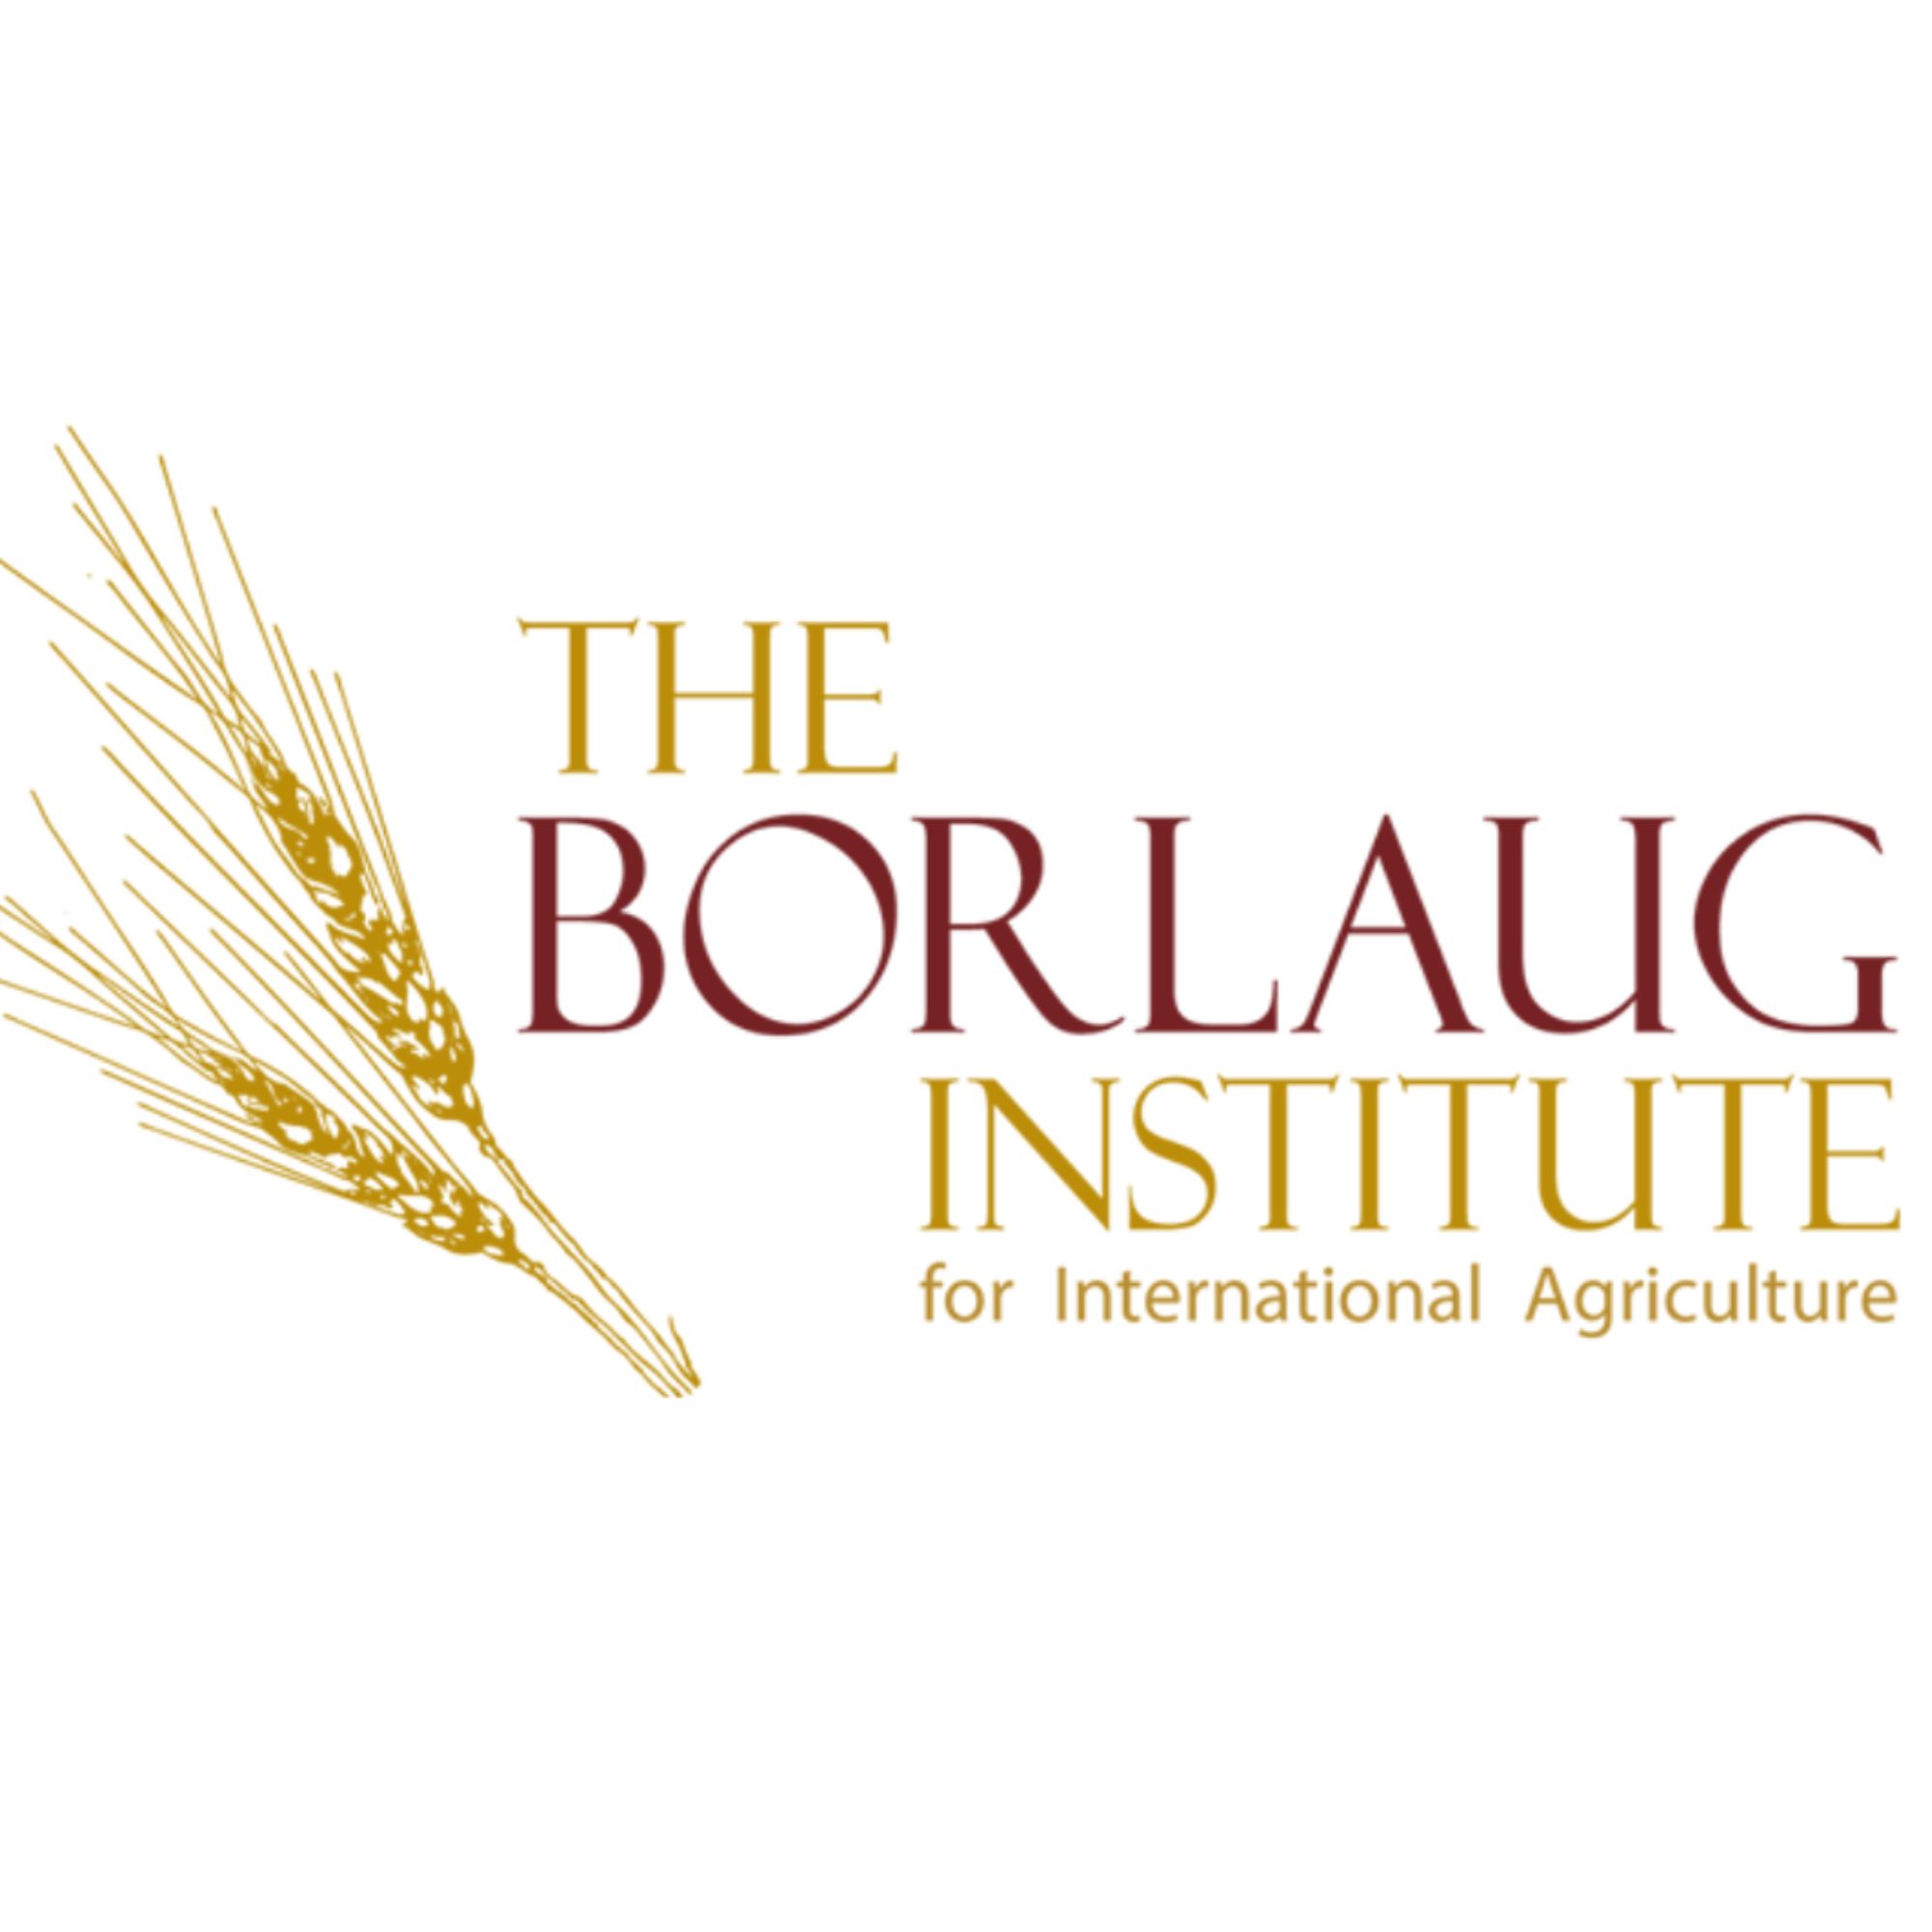 THE BORLAUG INSTITUTE FOR INTERNATIONAL AGRICULTURE